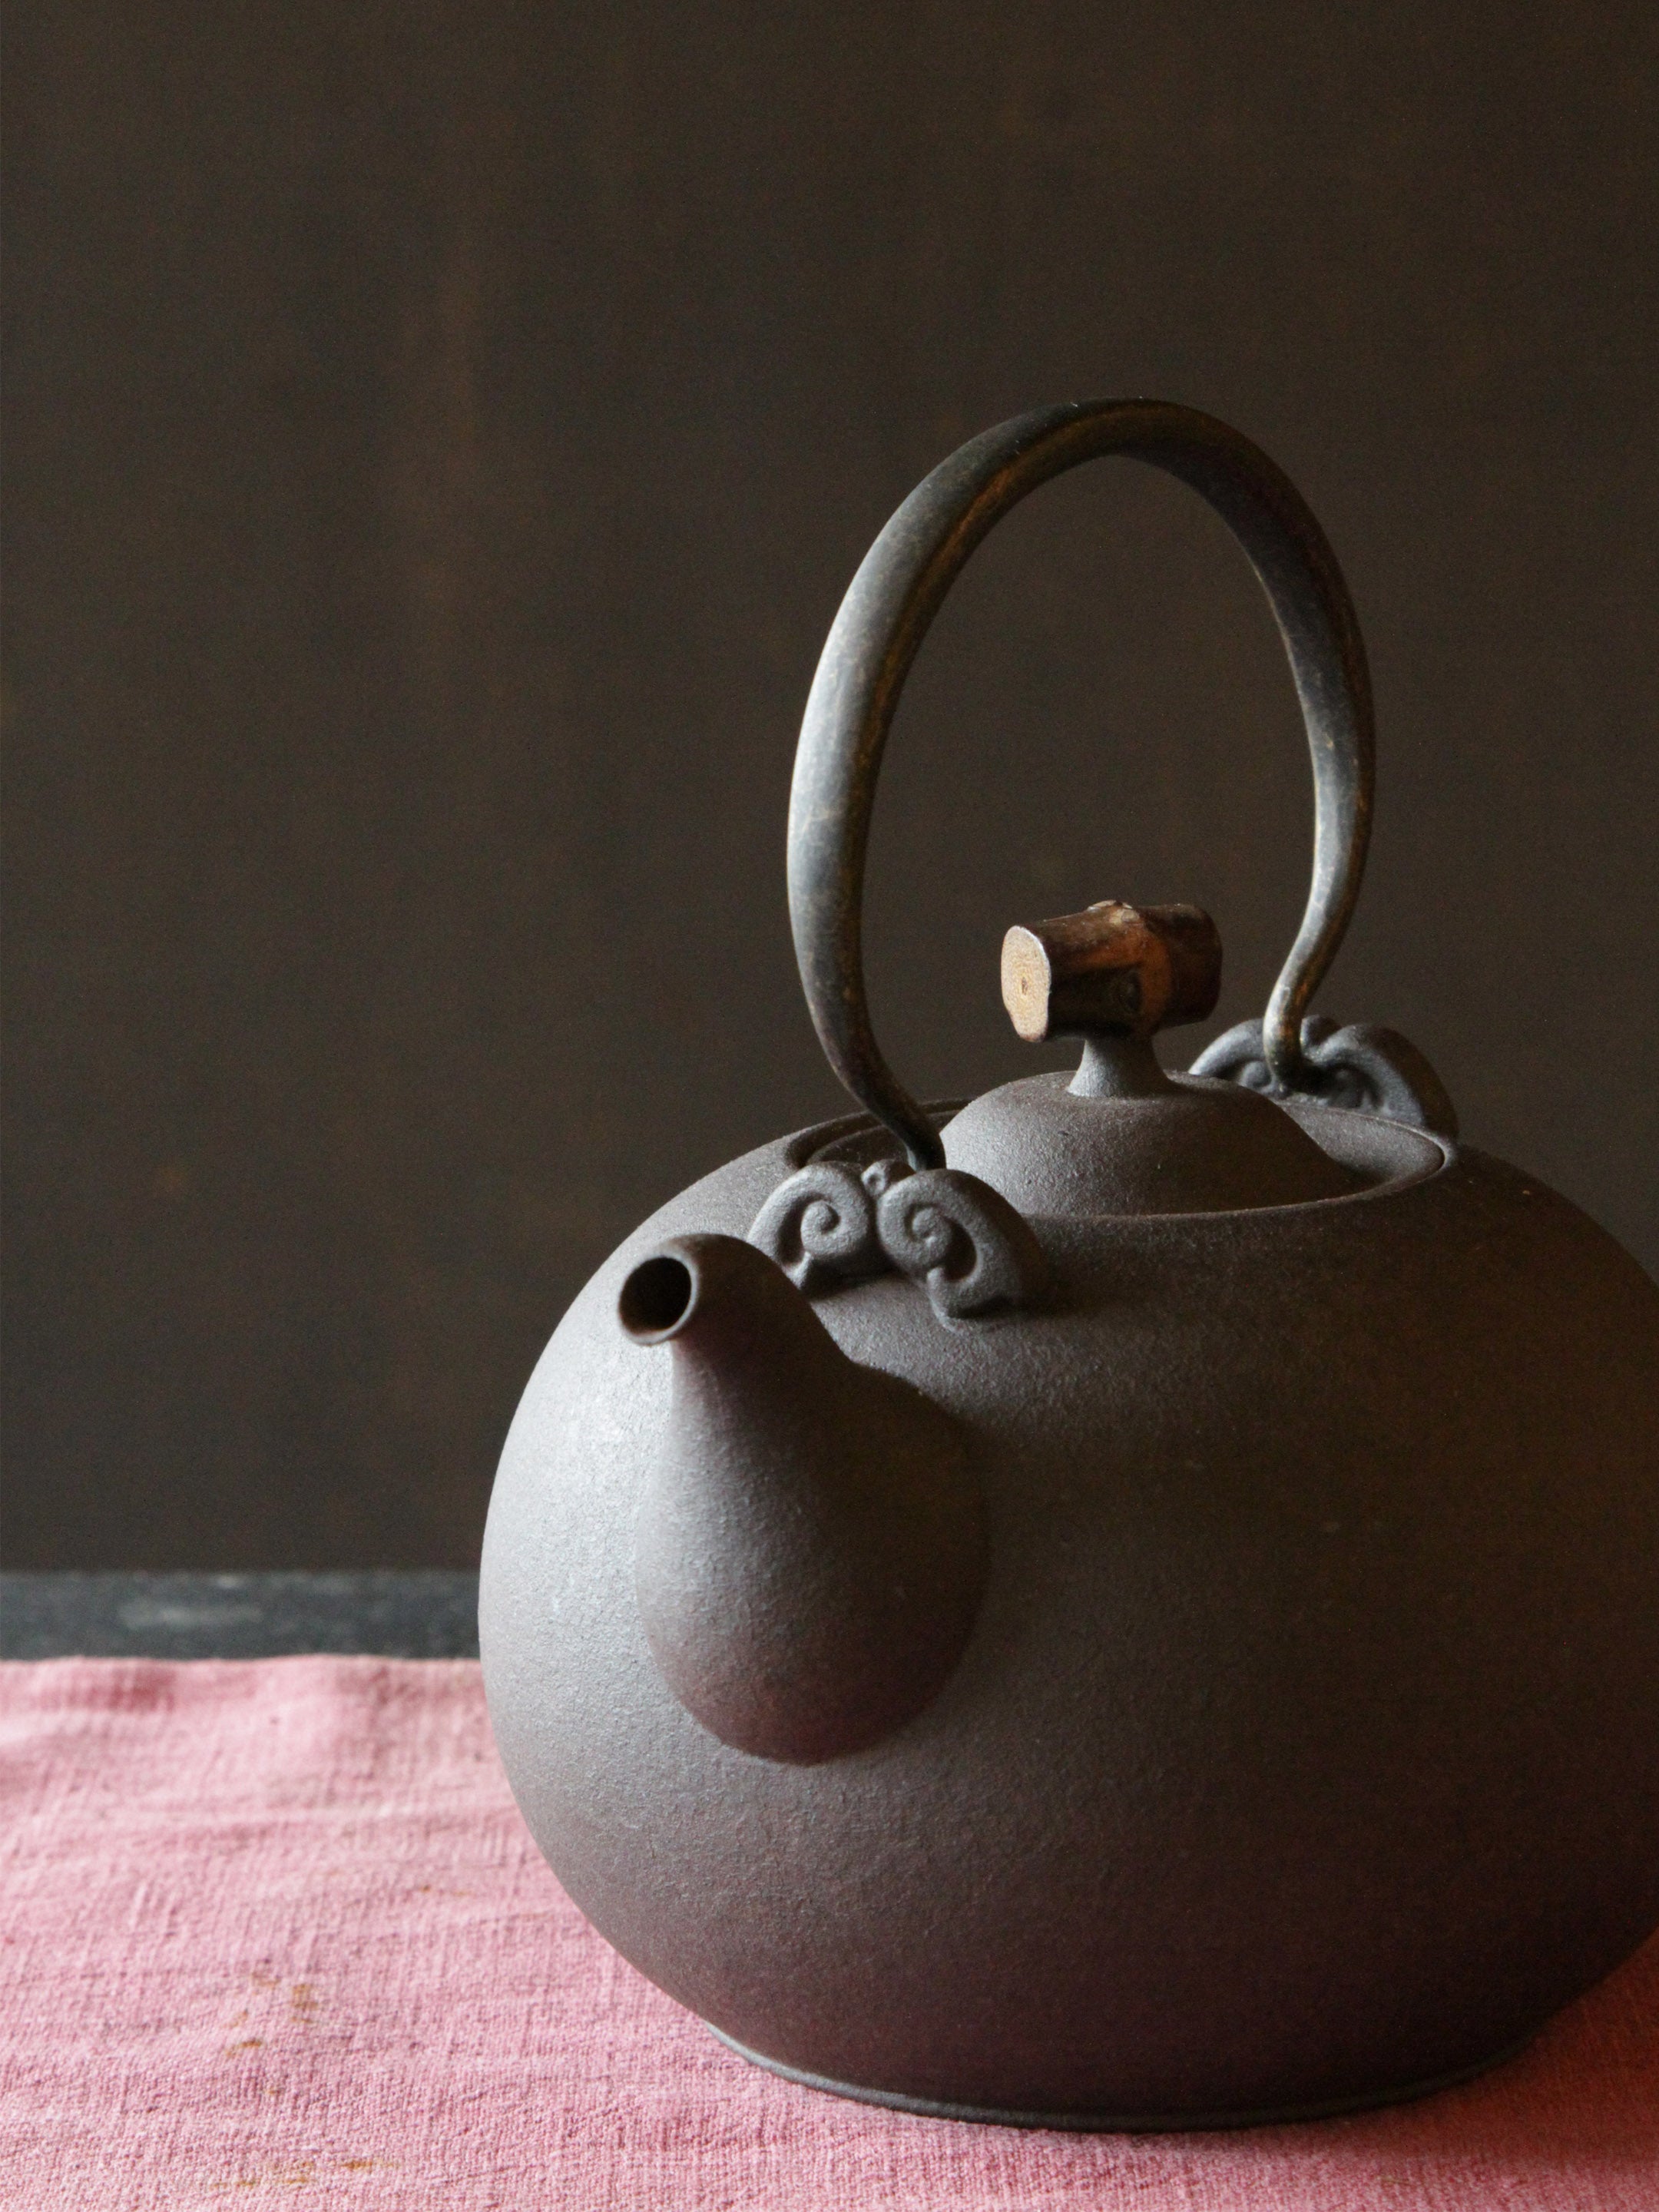 Black Ceramic Loop Handle Tea Water Kettle & 220V Electric Stove for Gongfu Tea  Kettle & Stove Set - Dragon Tea House